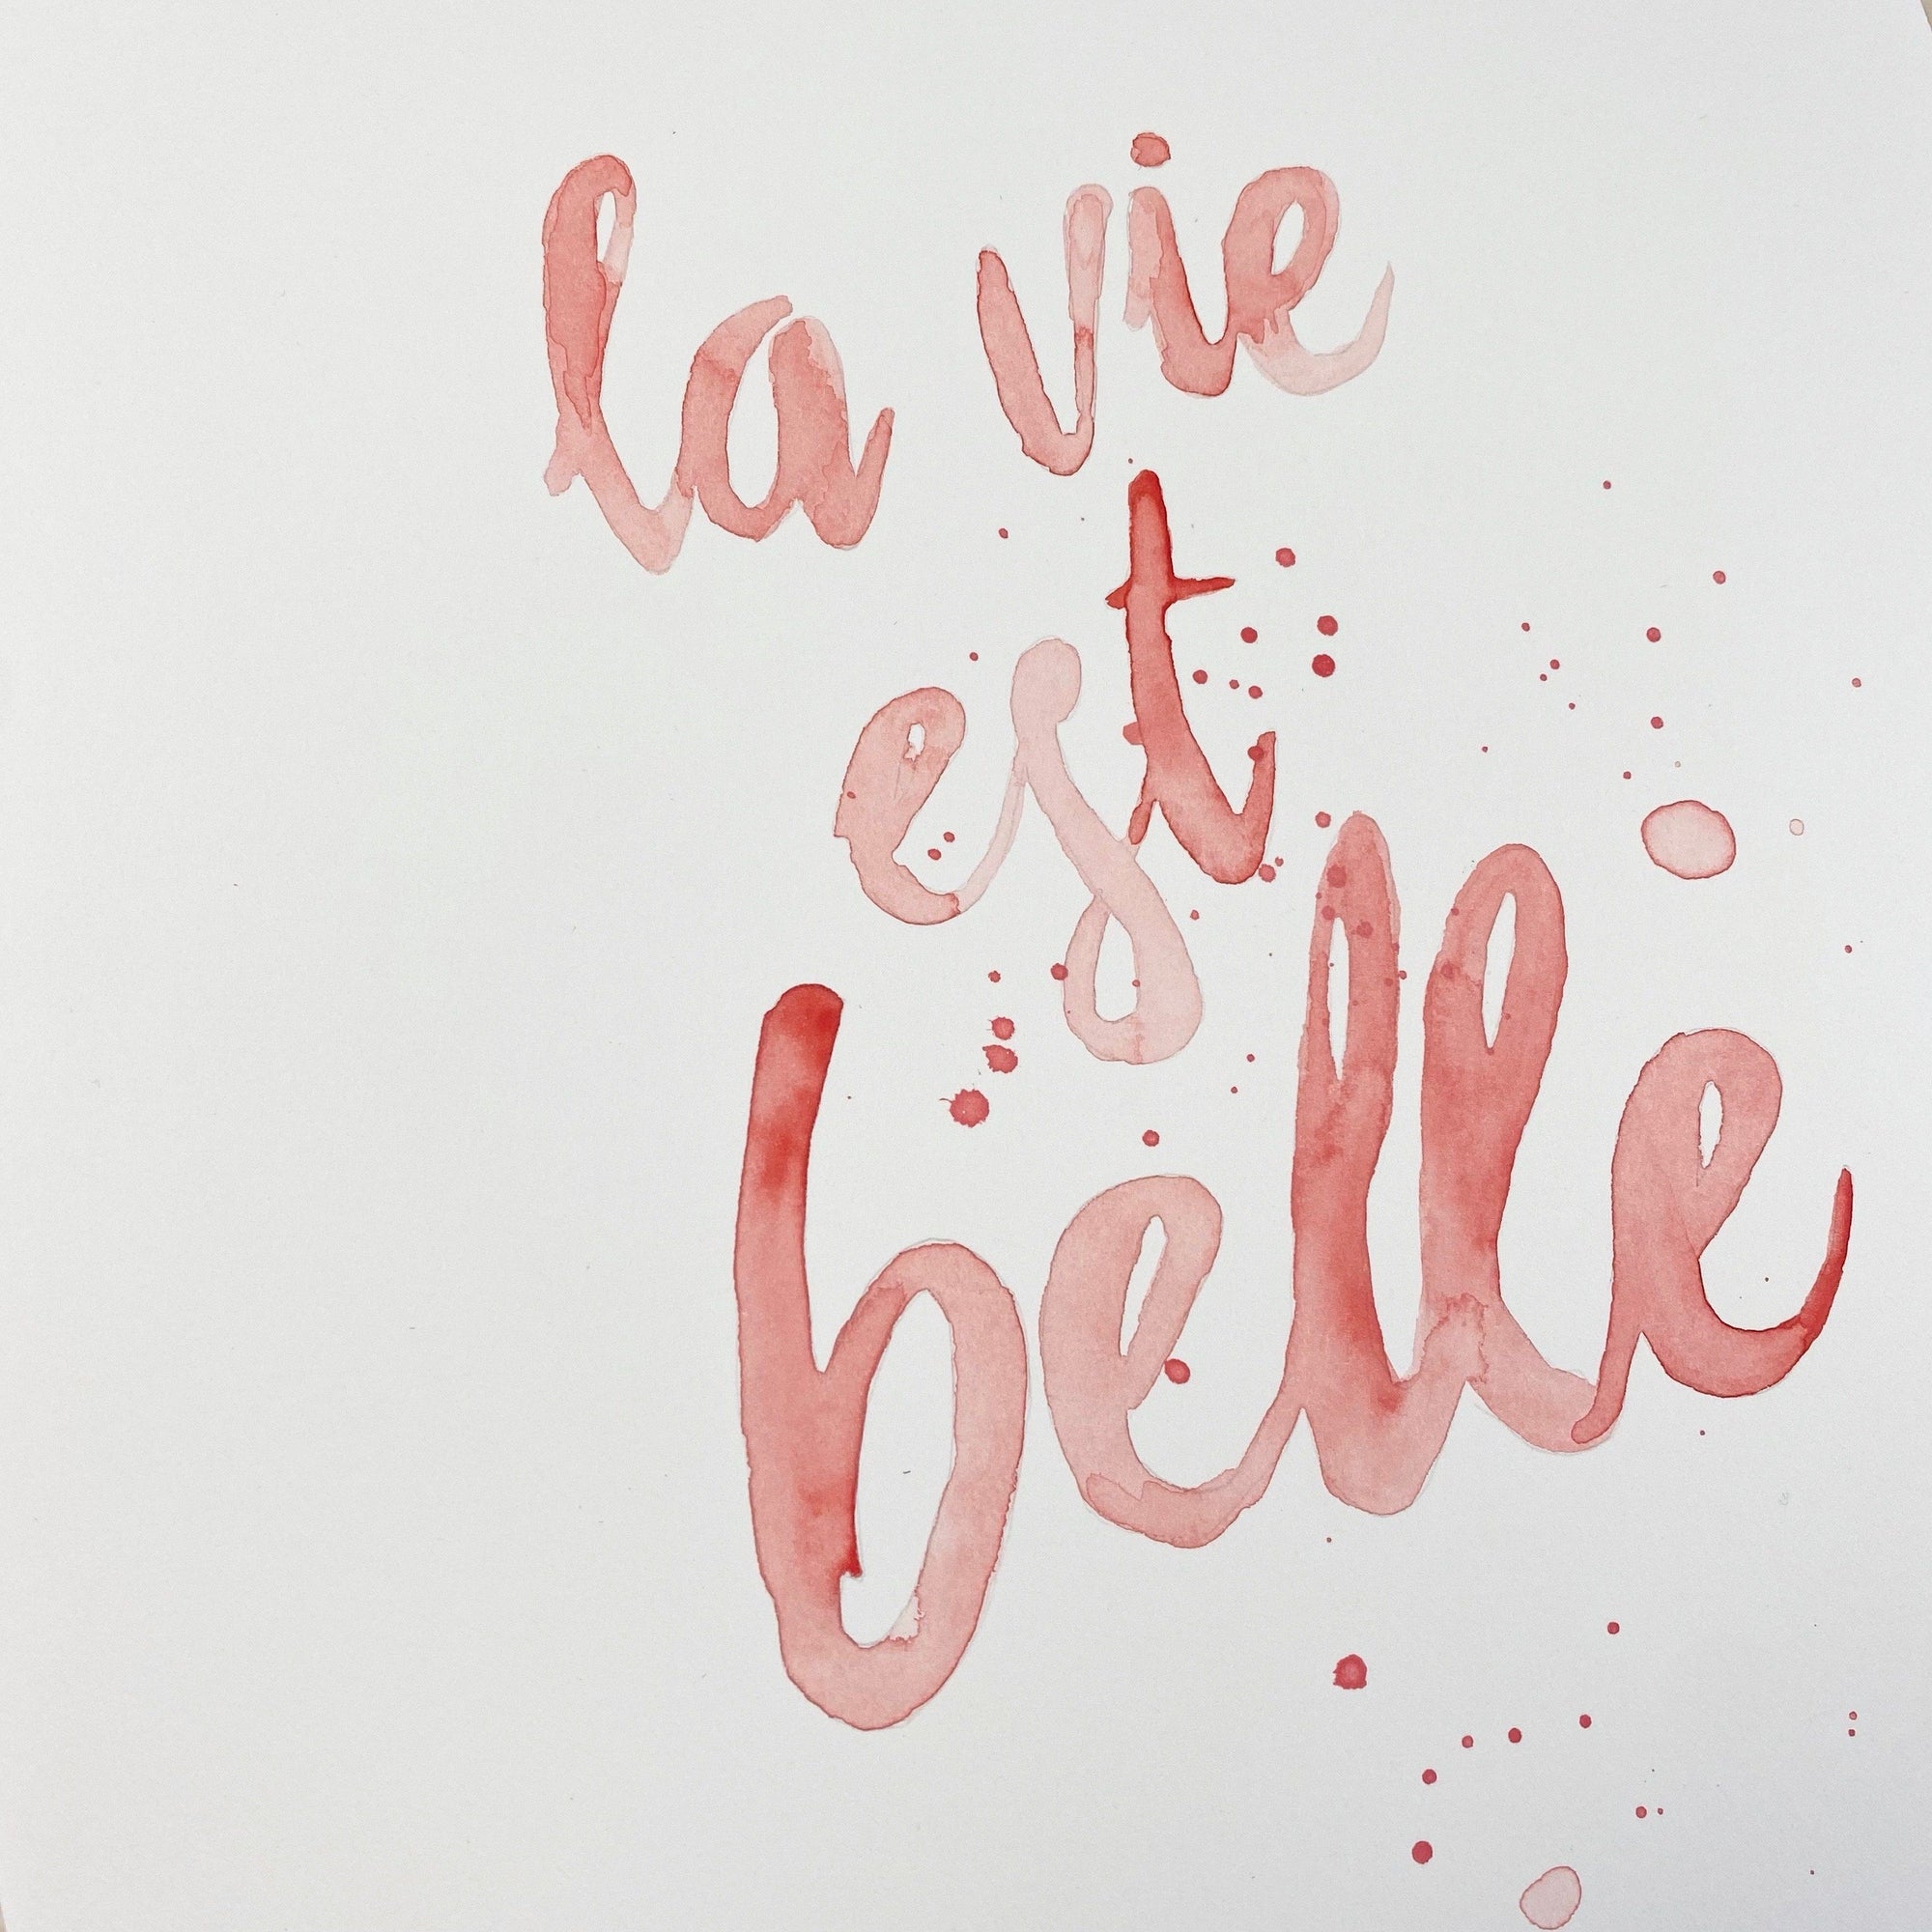 Original-Illustration | La vie est belle Kunstdruck Leo la Douce 